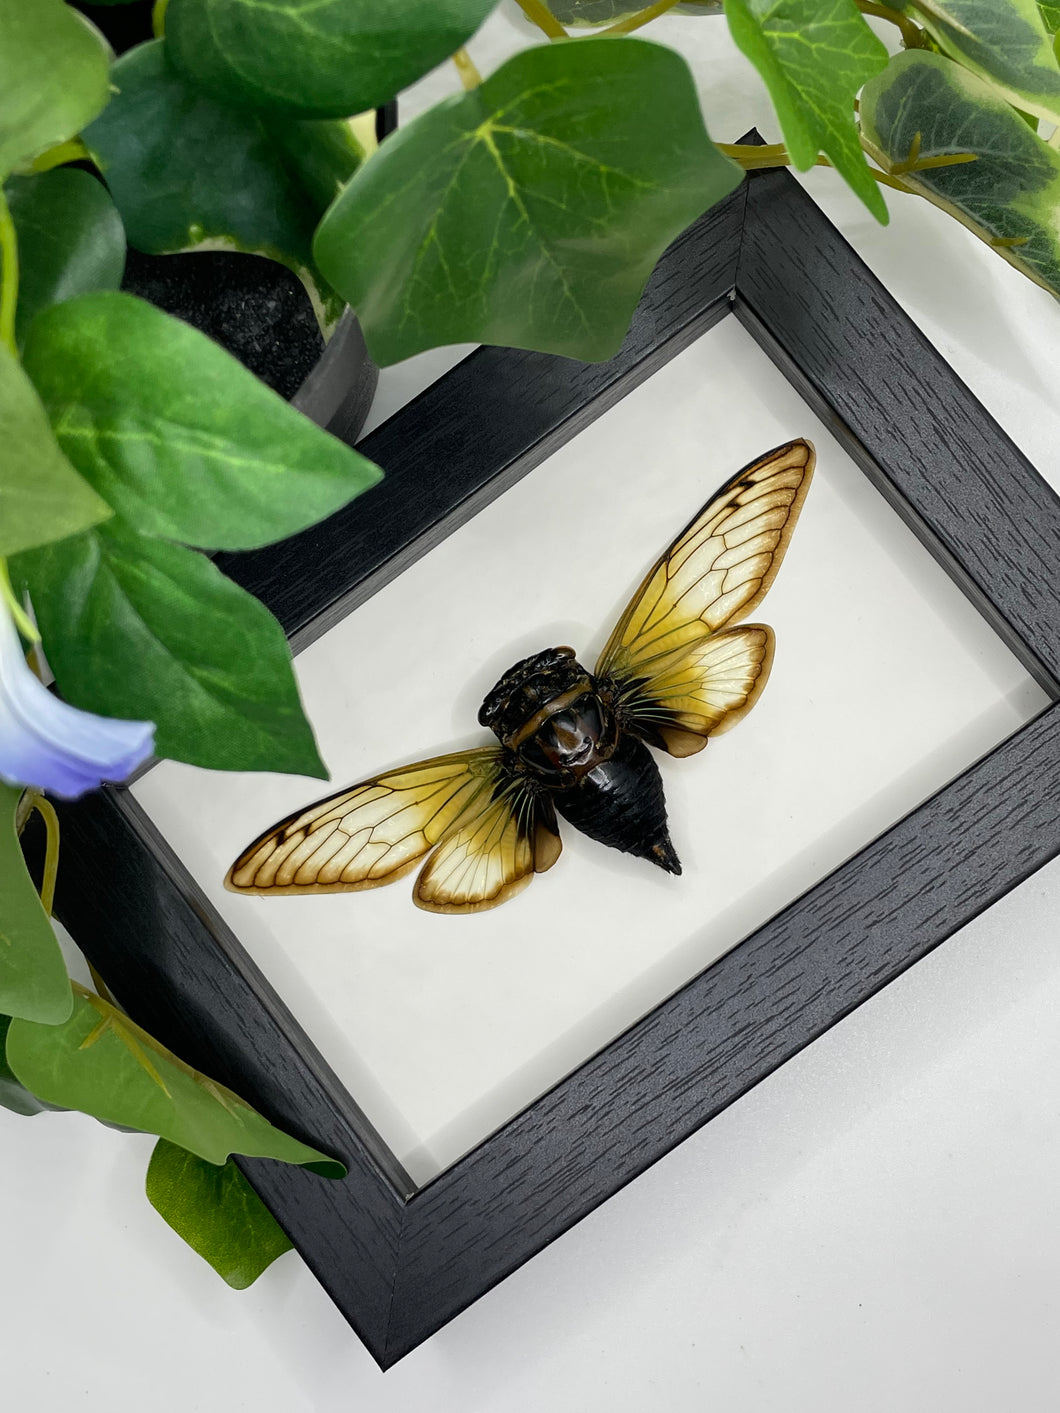 Java sp. Cicada in a frame